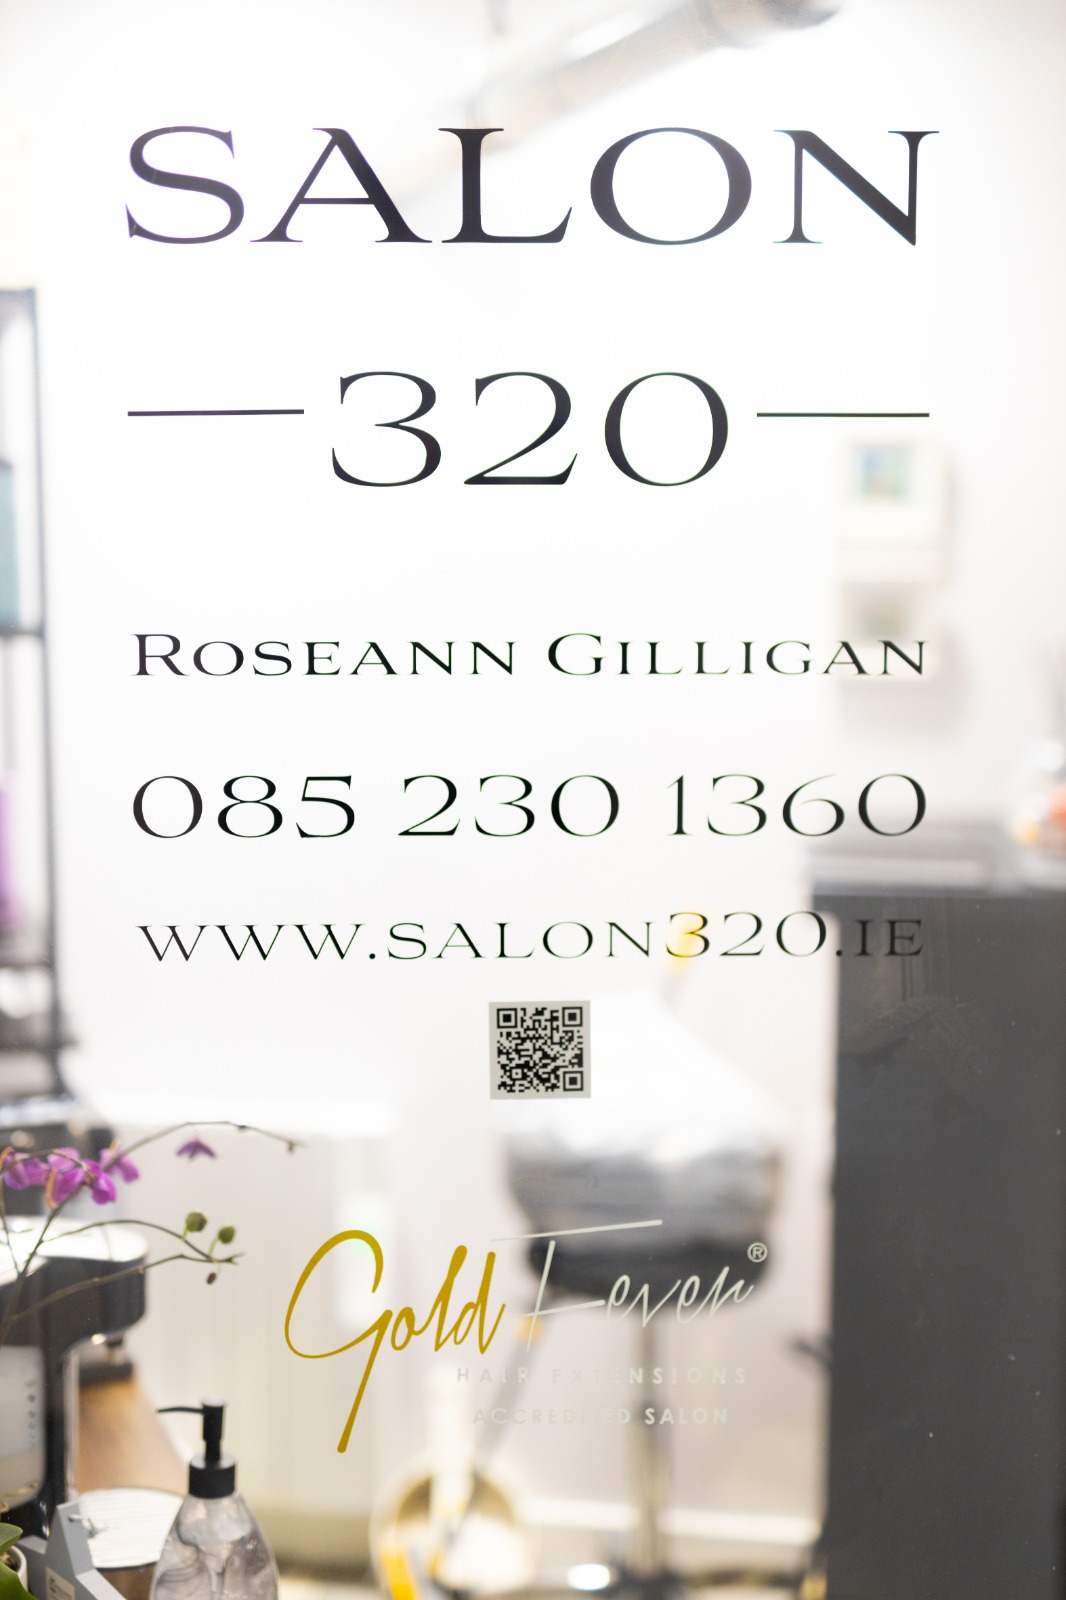 Salon 320 Athlone contact information